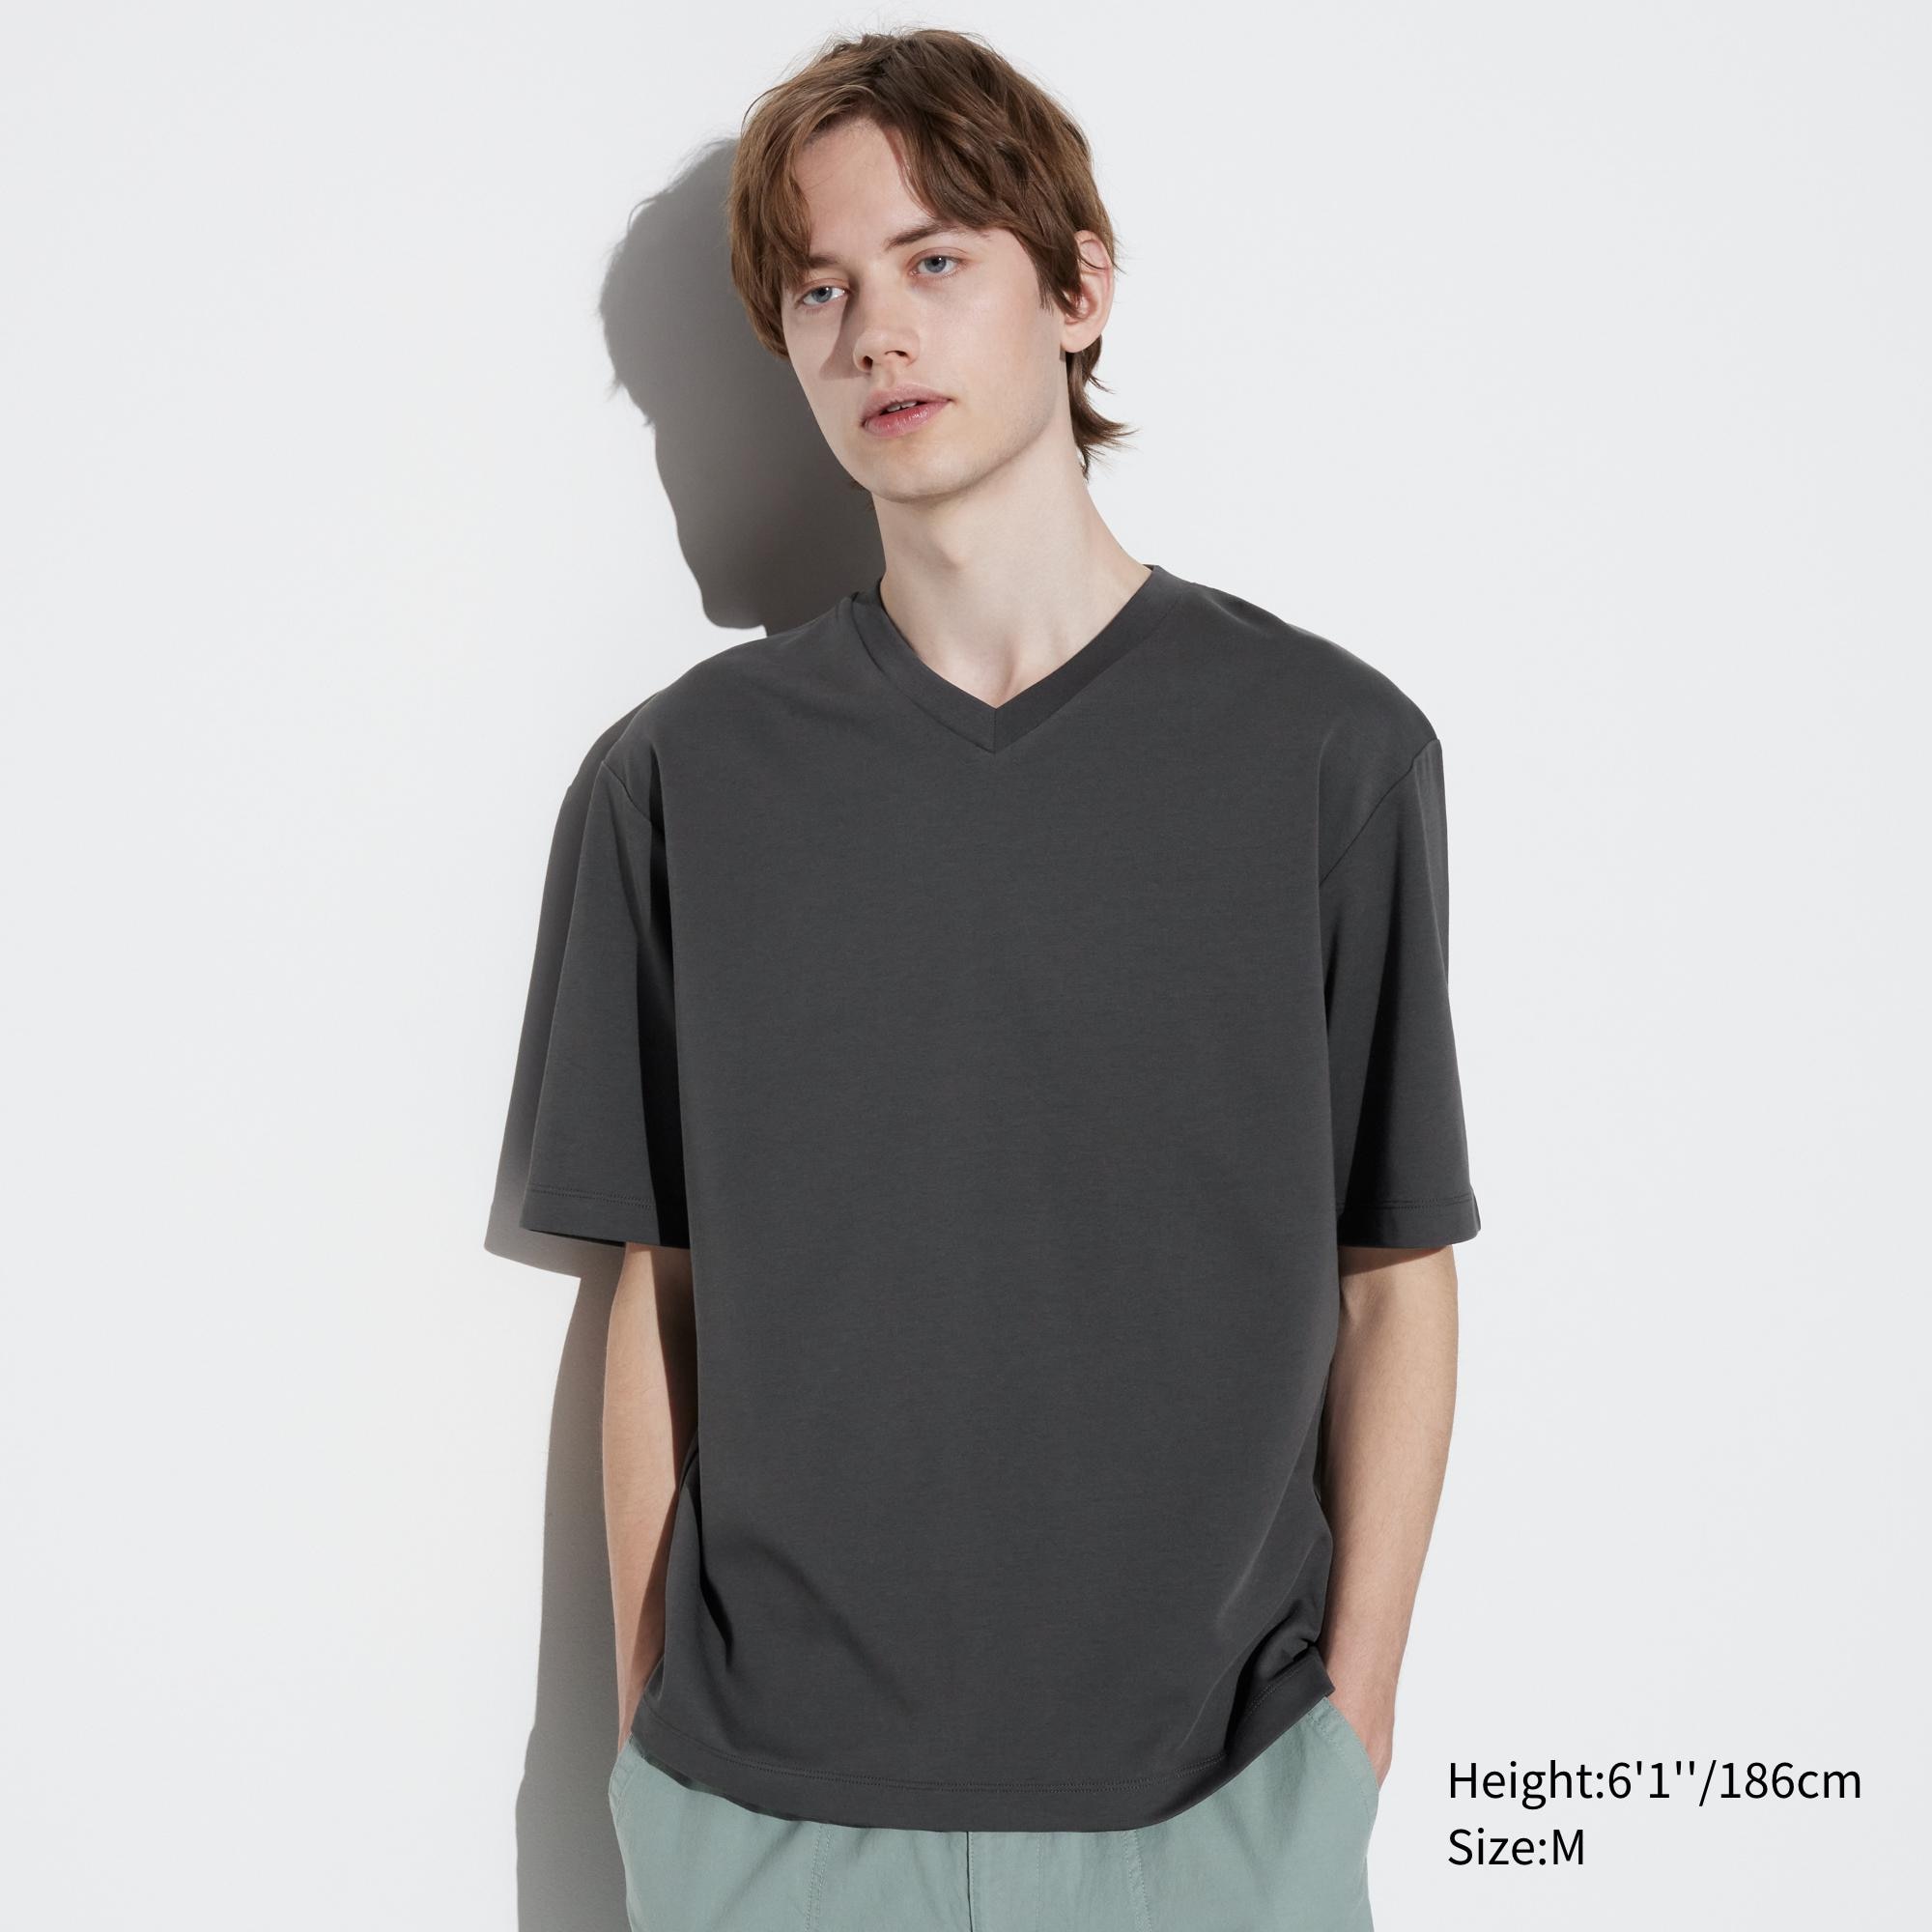 AIRism Cotton Oversized Half-Sleeve T-Shirt